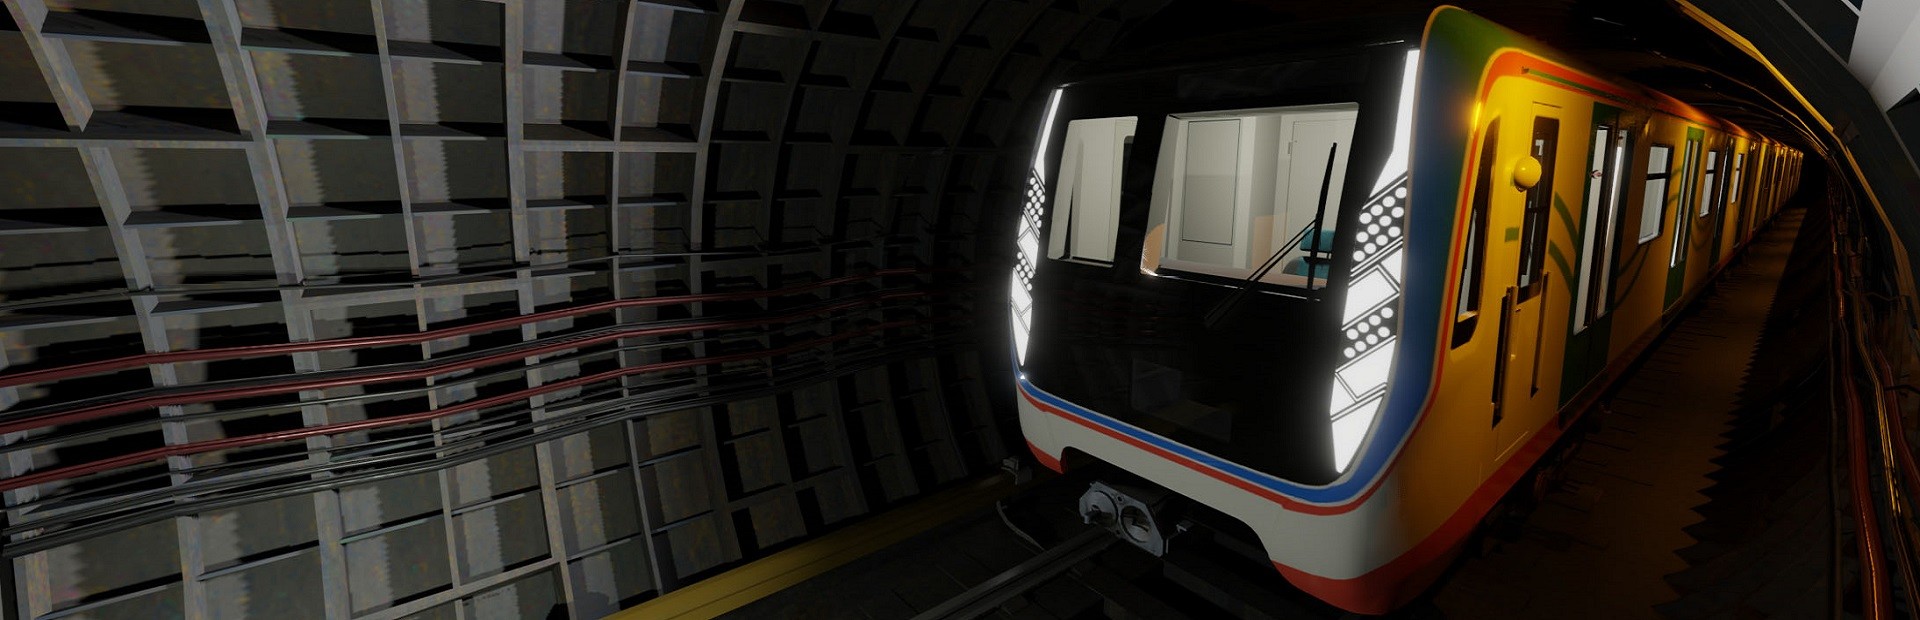 Metro Simulator 2019 cover image